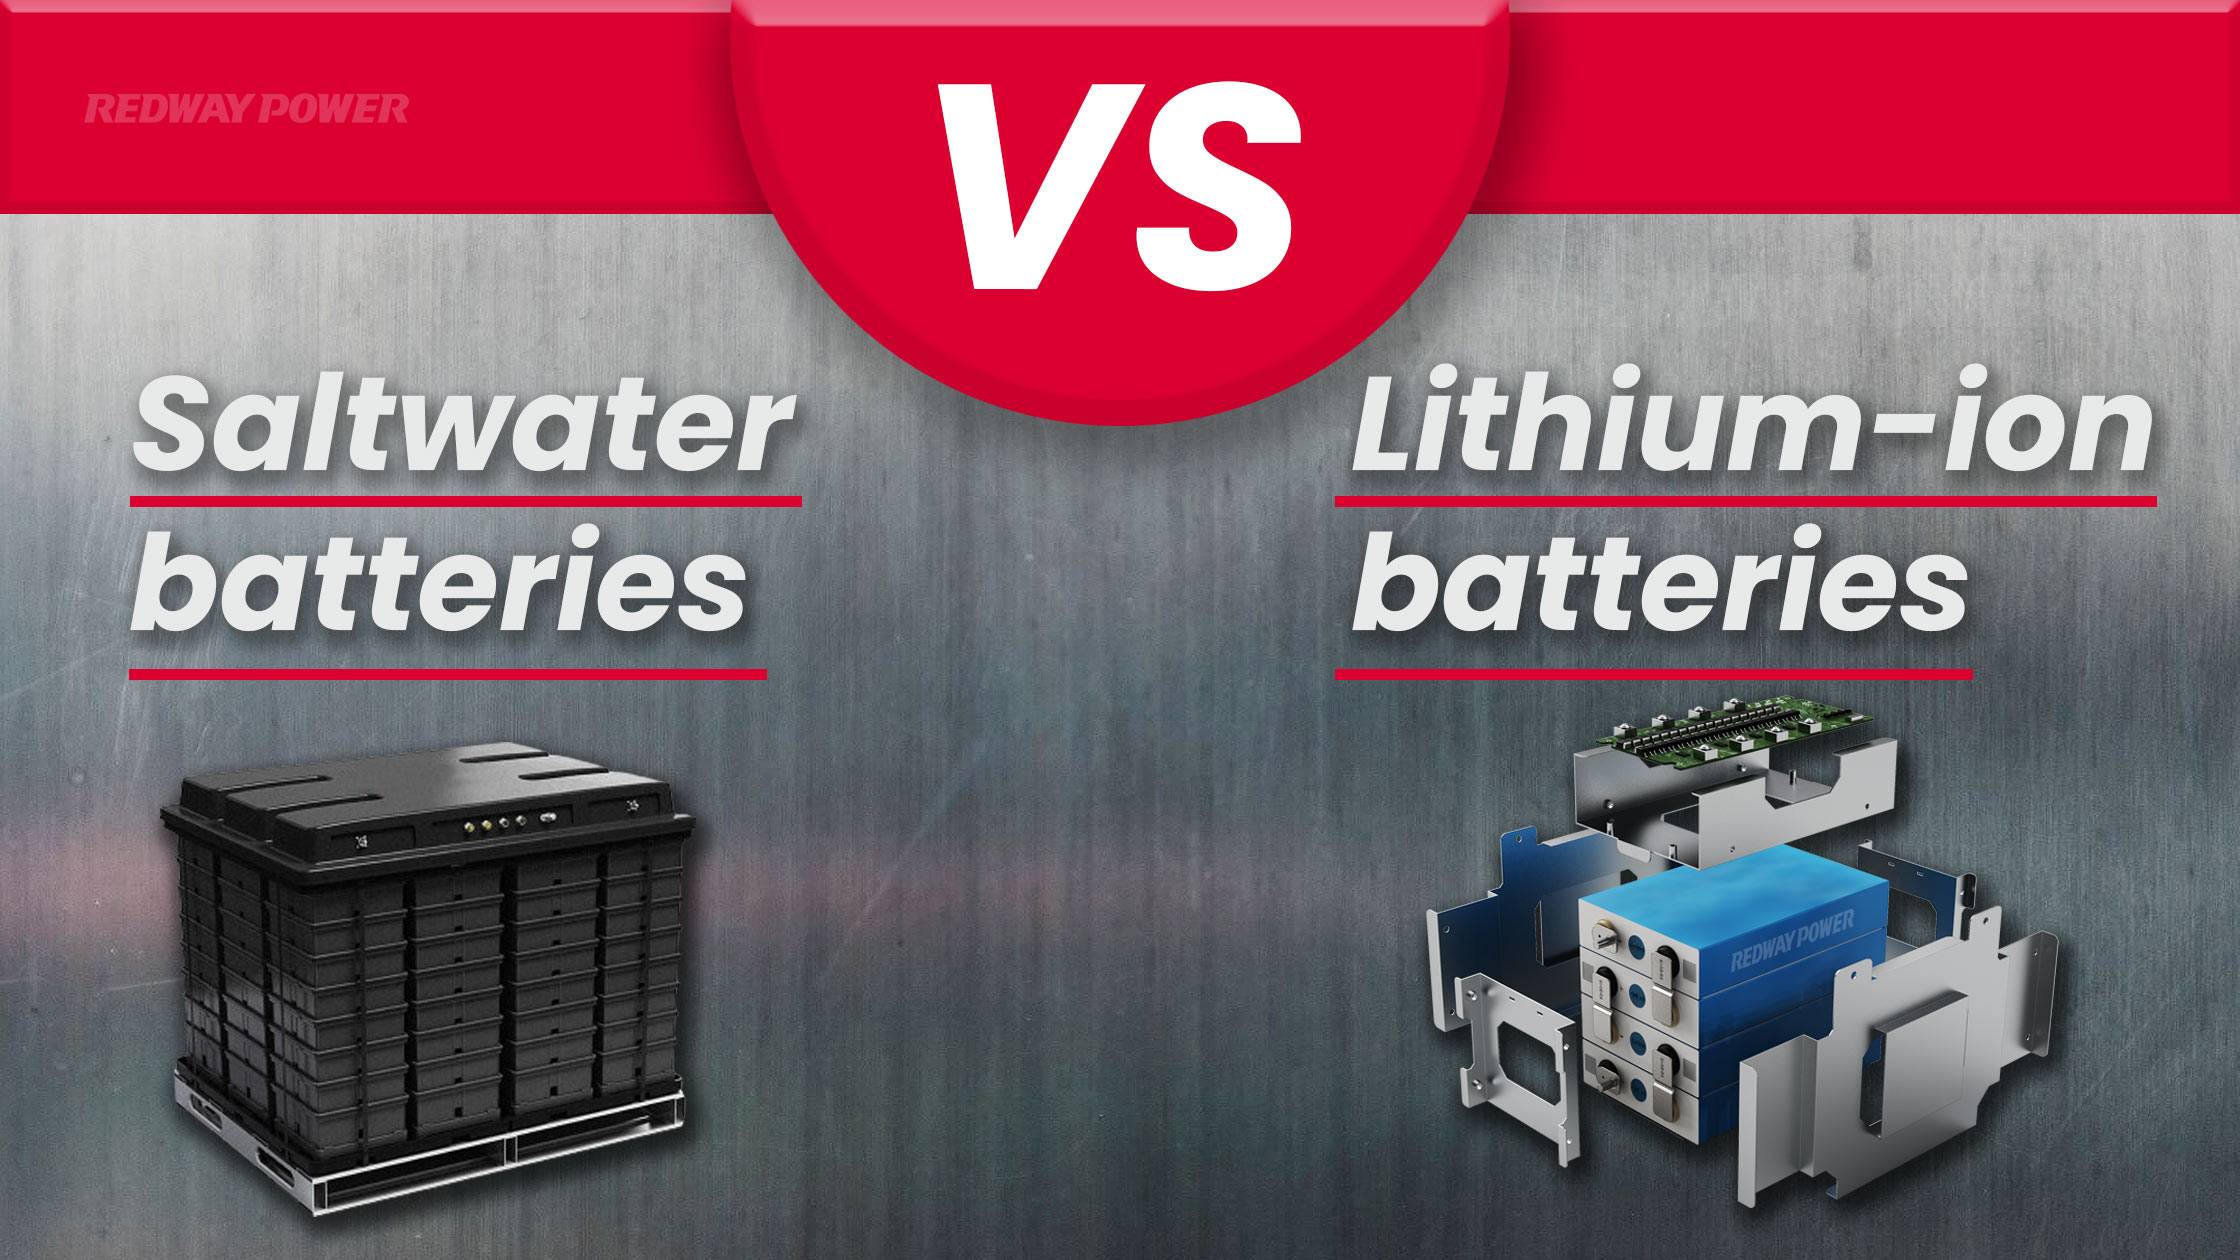 Saltwater batteries vs lithium-ion batteries